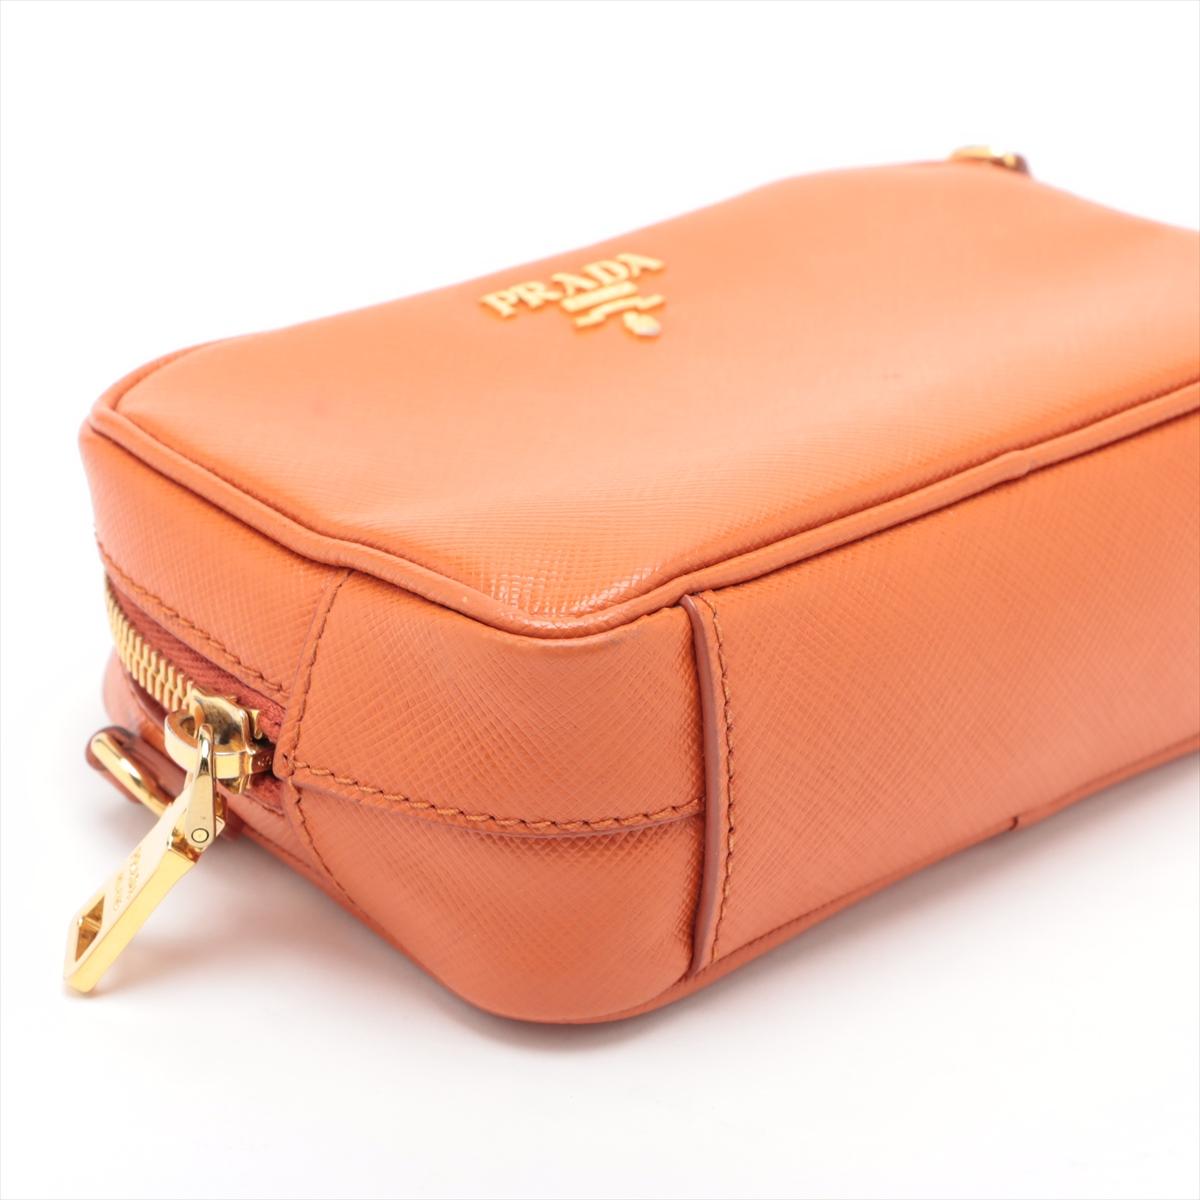 Women's Prada Saffiano Leather Camera Bag Orange